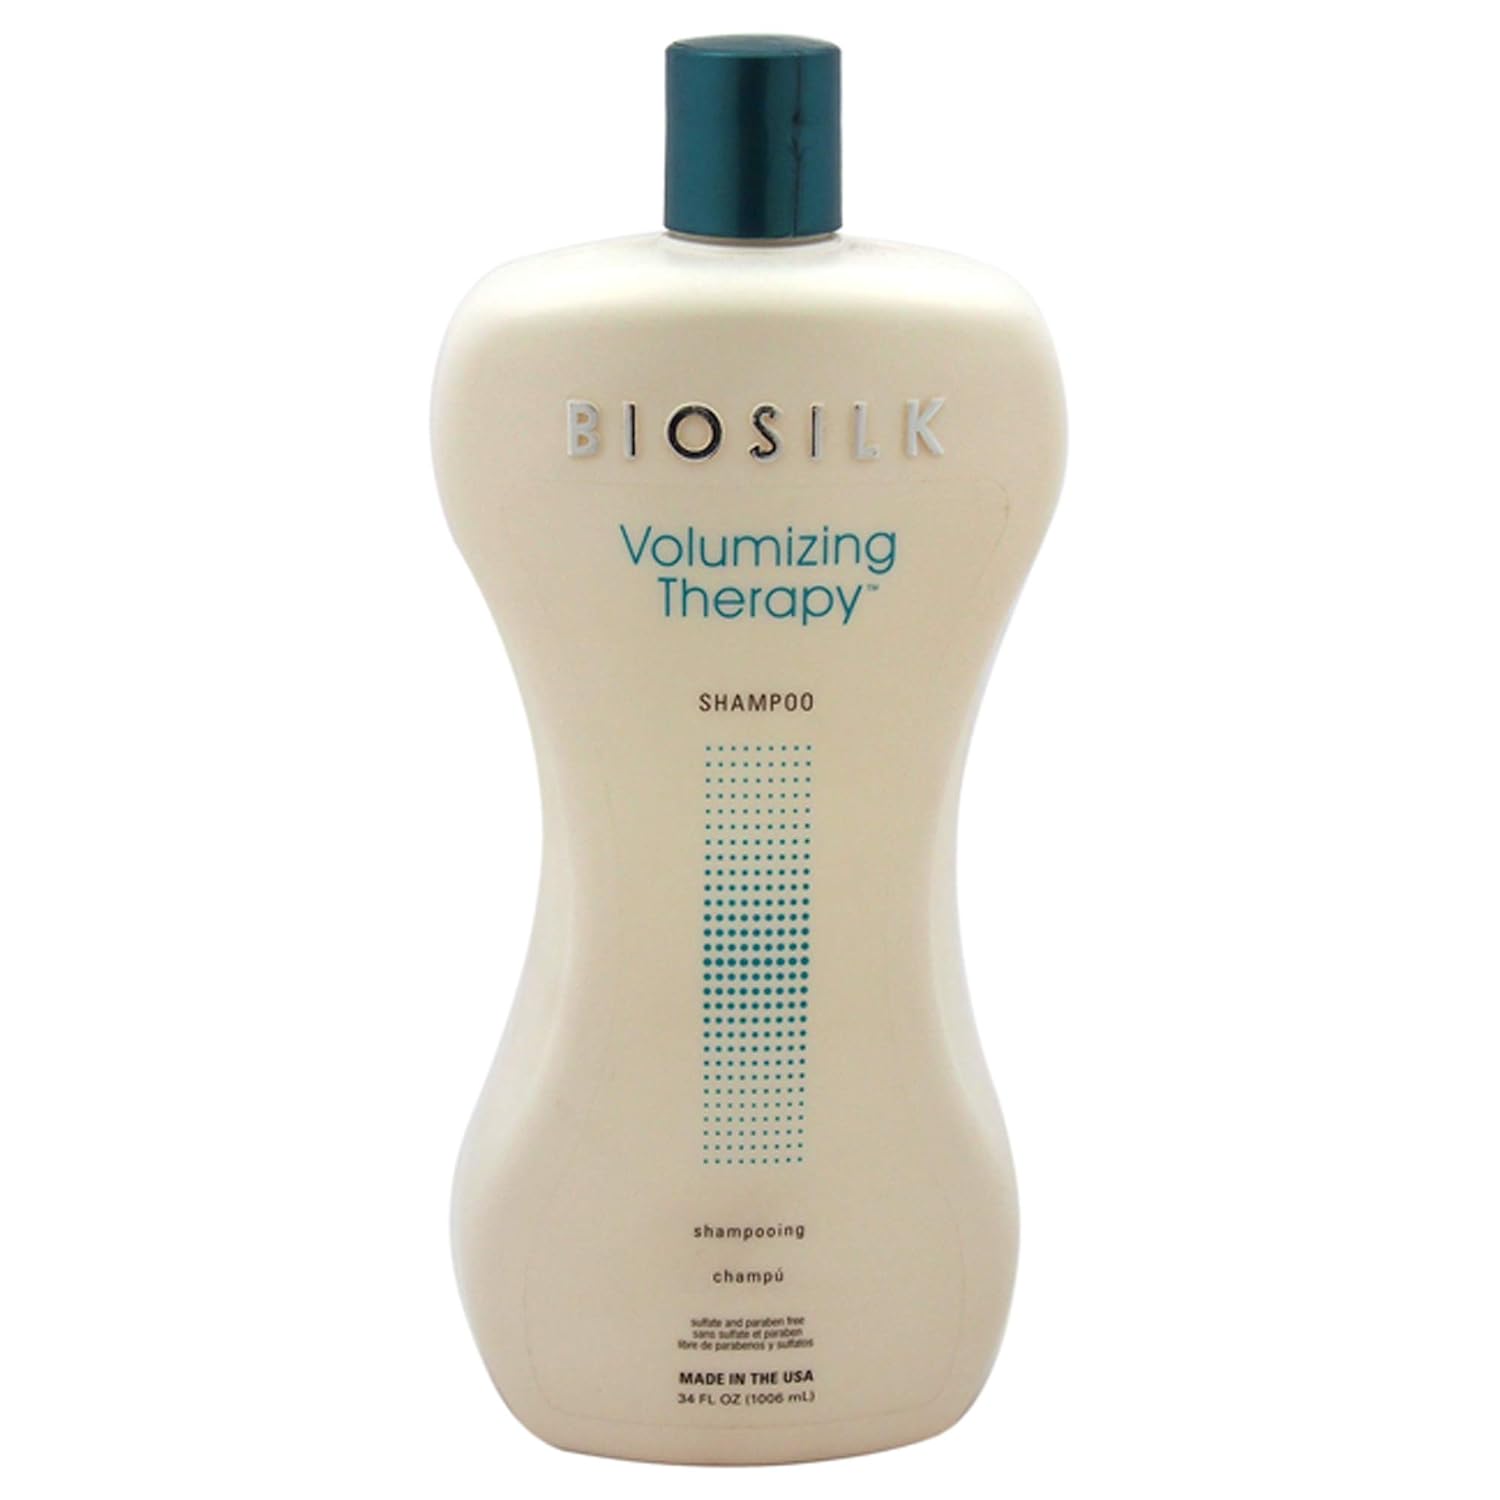 Biosilk Volumizing Therapy Shampoo for Unisex - 34 oz Shampoo